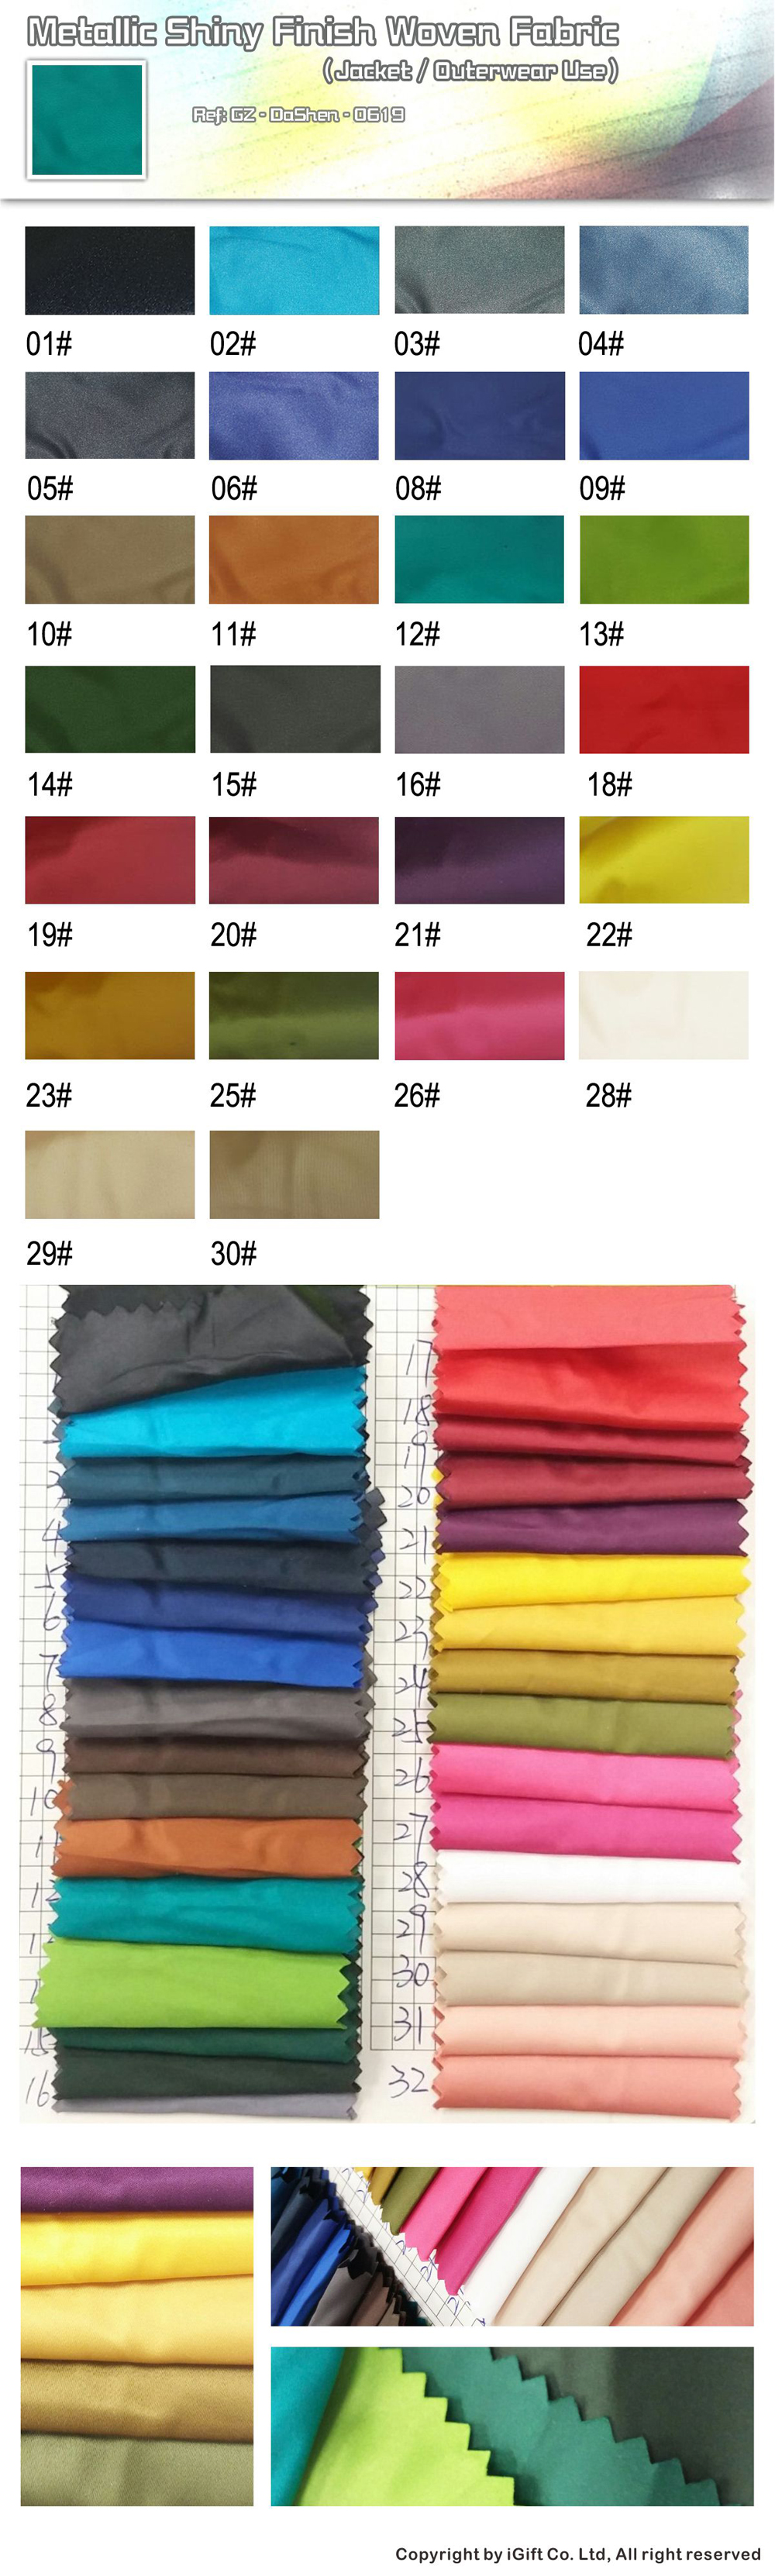 MetallicShiny Finish Woven Fabric 0619